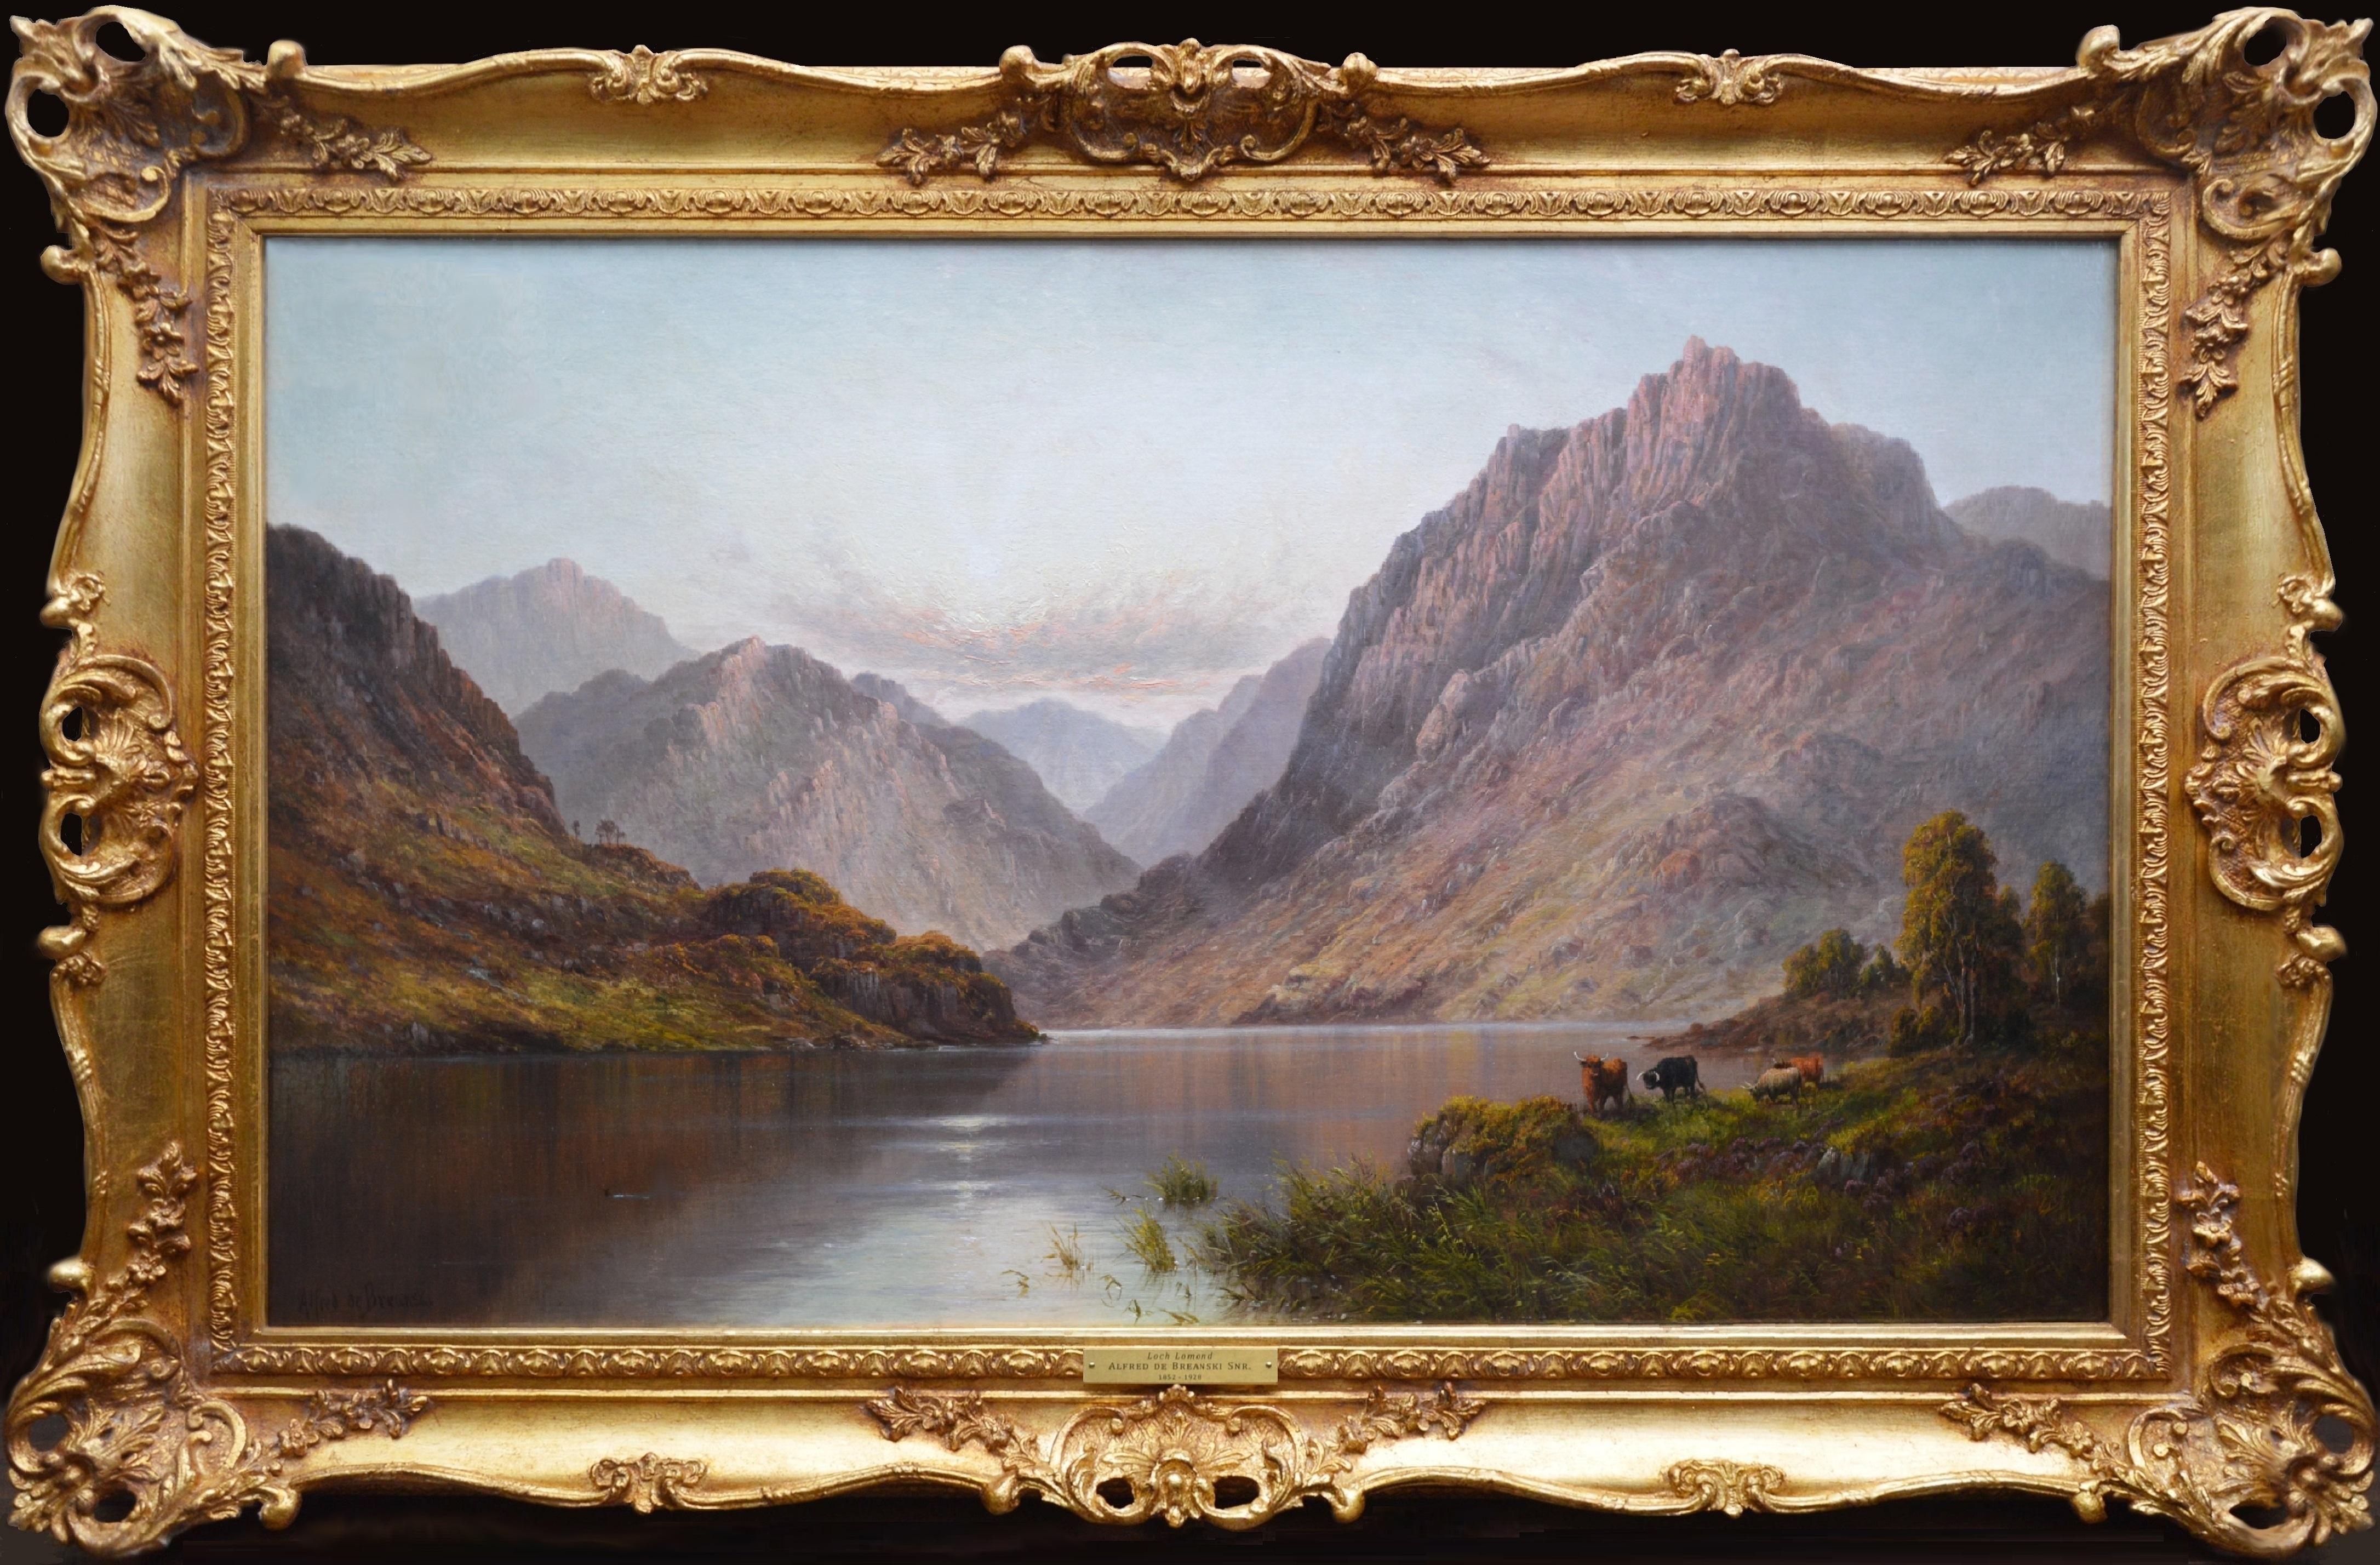 Alfred de Breanski Sr. Landscape Painting - Loch Lomond - Very Large 19th Century Scottish Highlands Landscape Oil Painting 